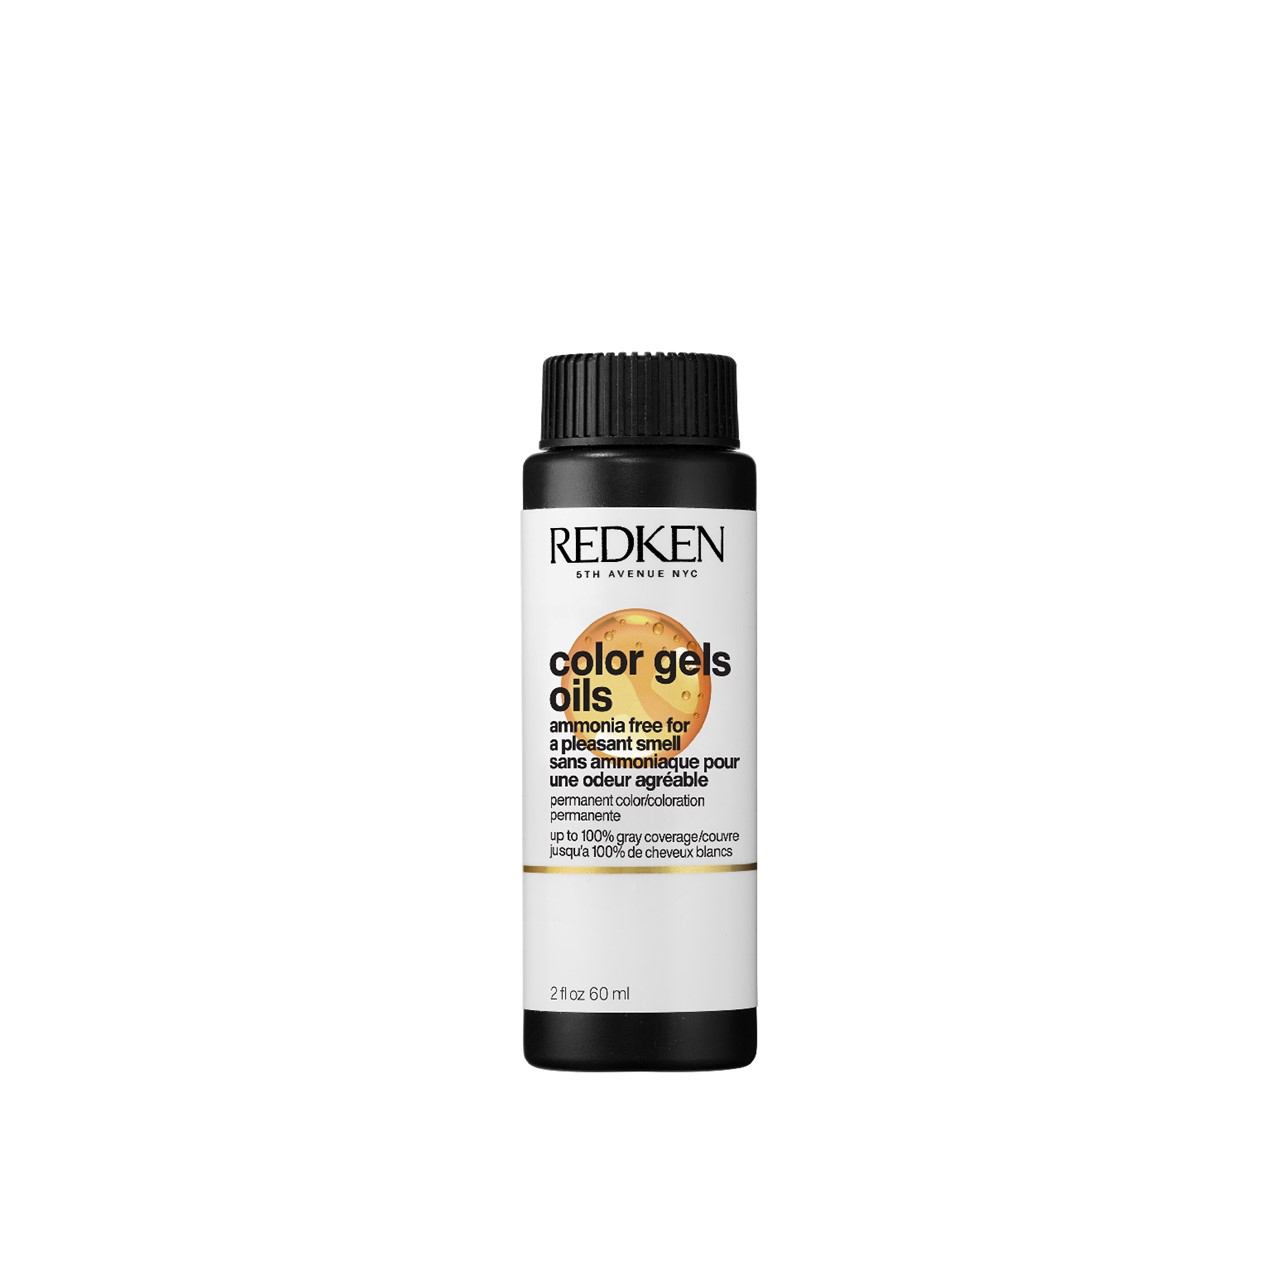 Redken Color Gels Oils 5GB Truffle Permanent Hair Dye 60ml (2.03 fl oz)